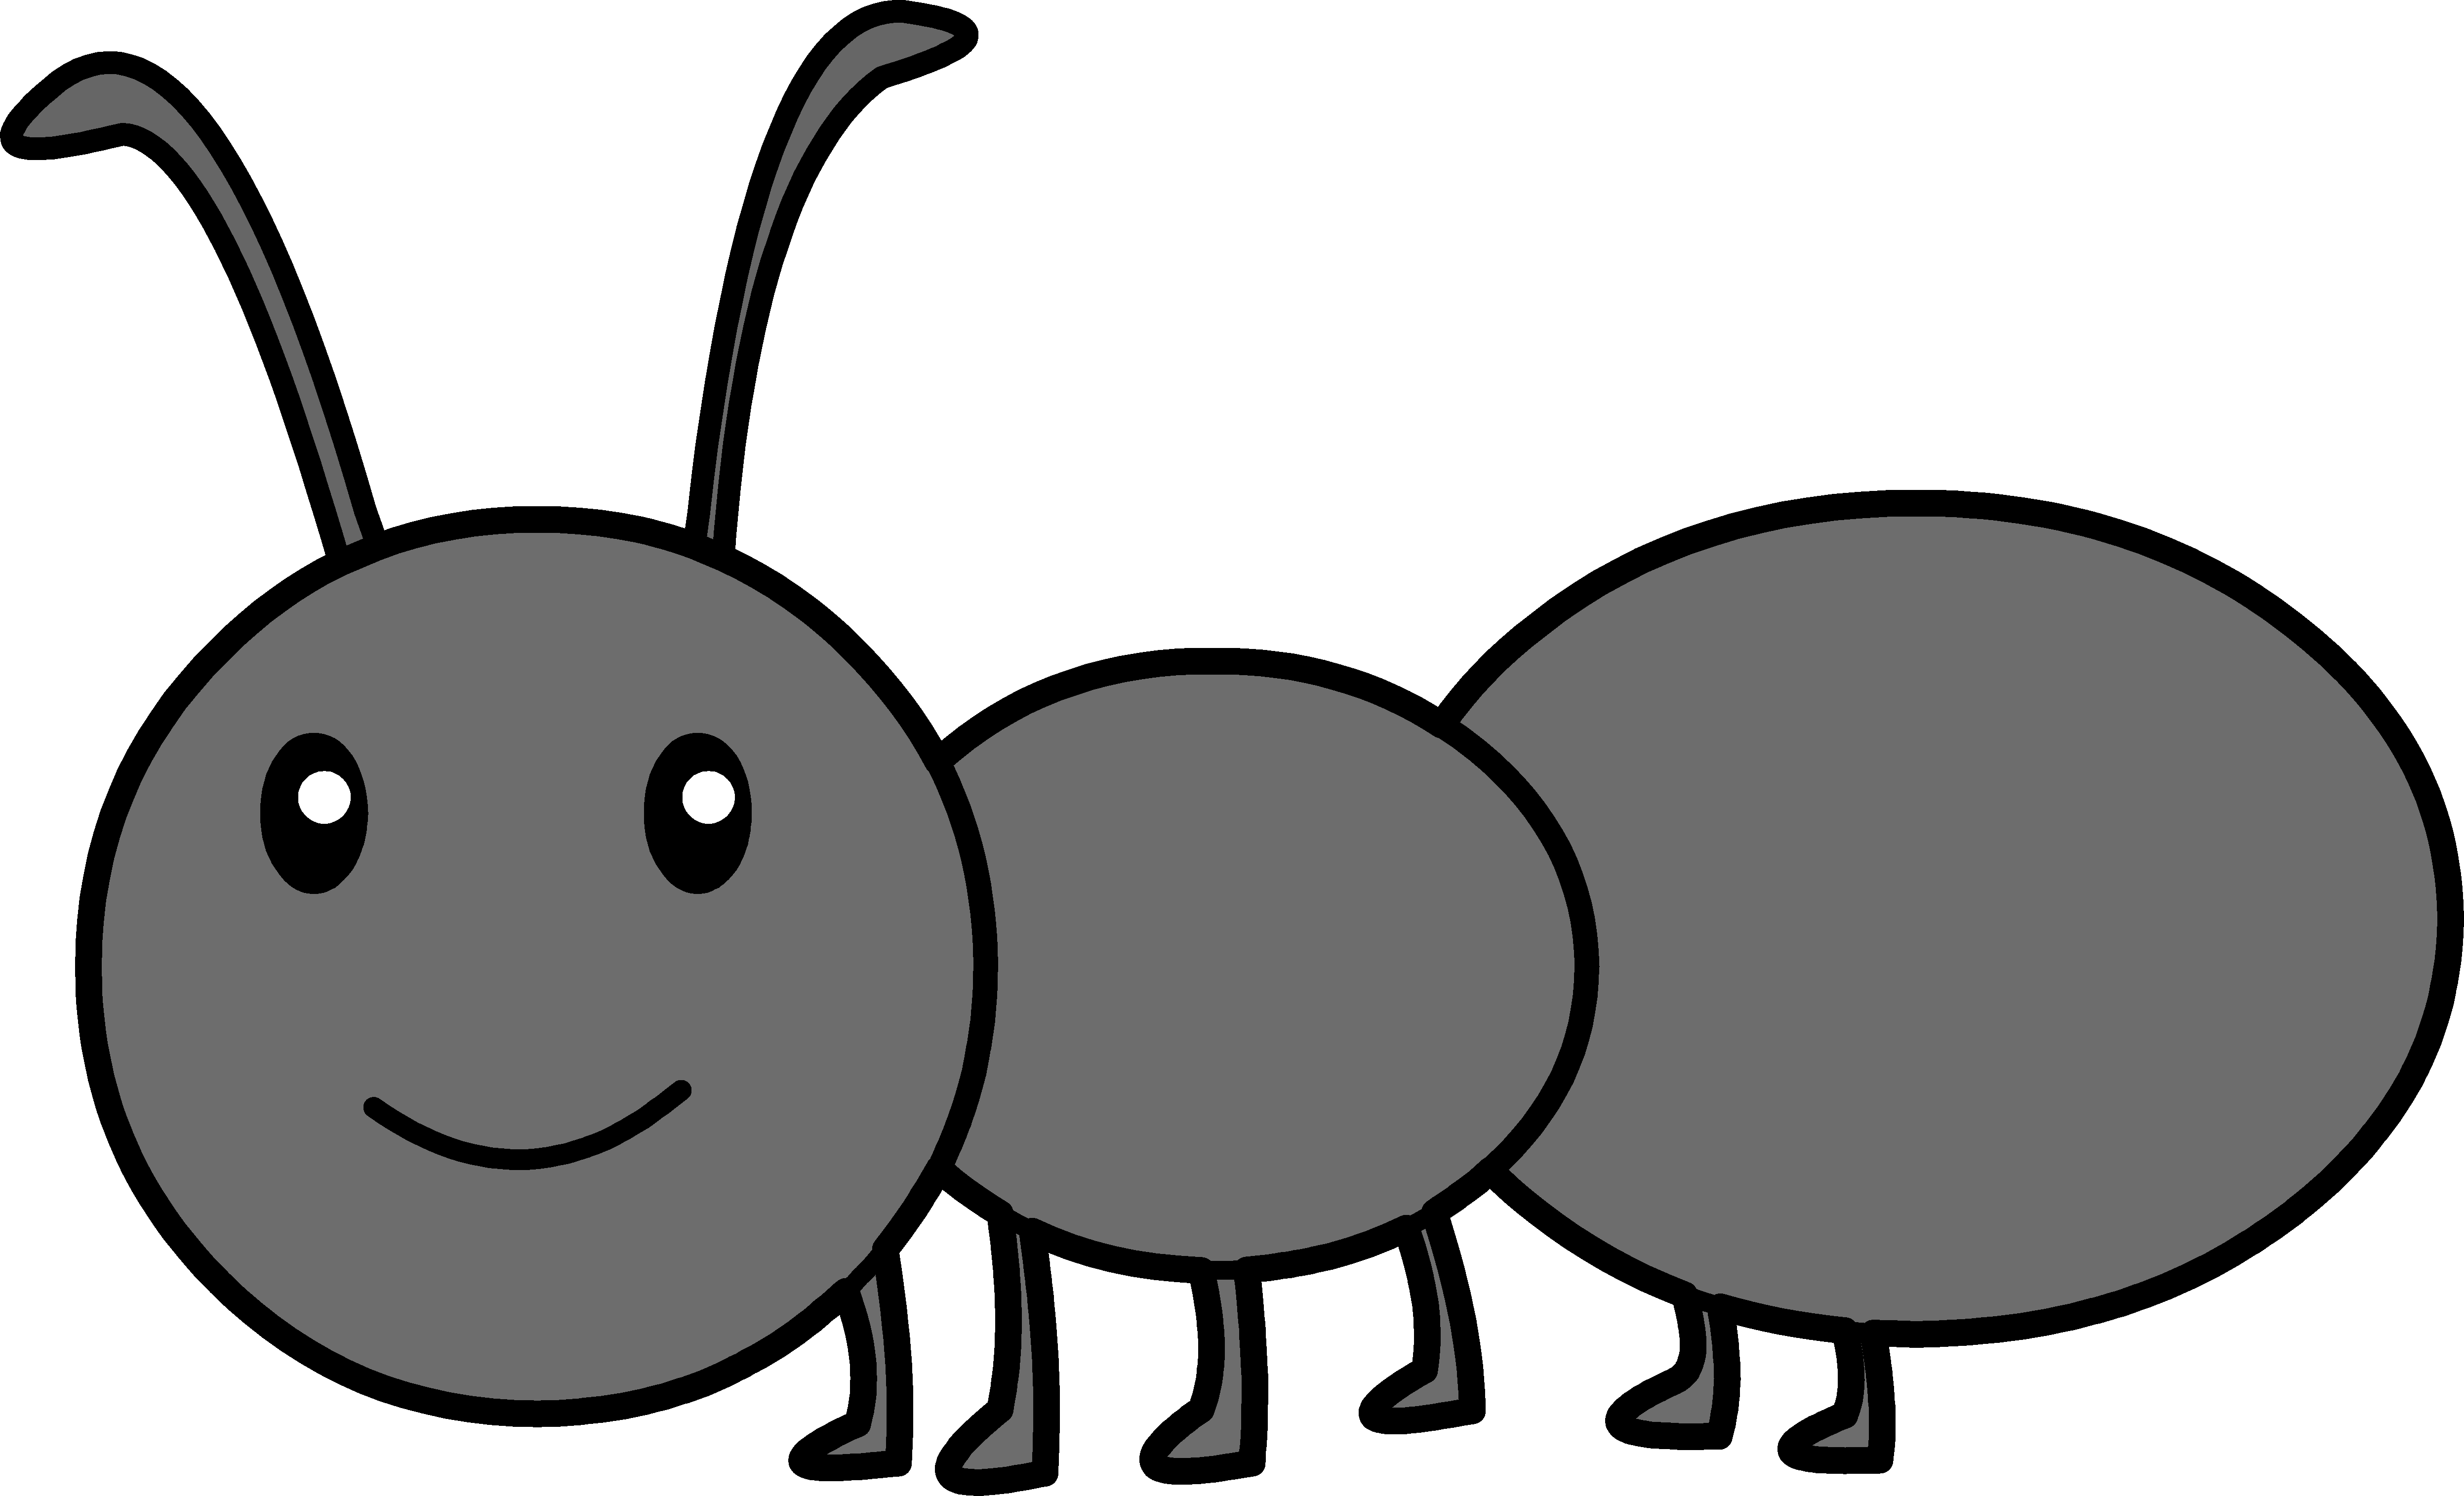 Ant clipart simple. Cute letters format black